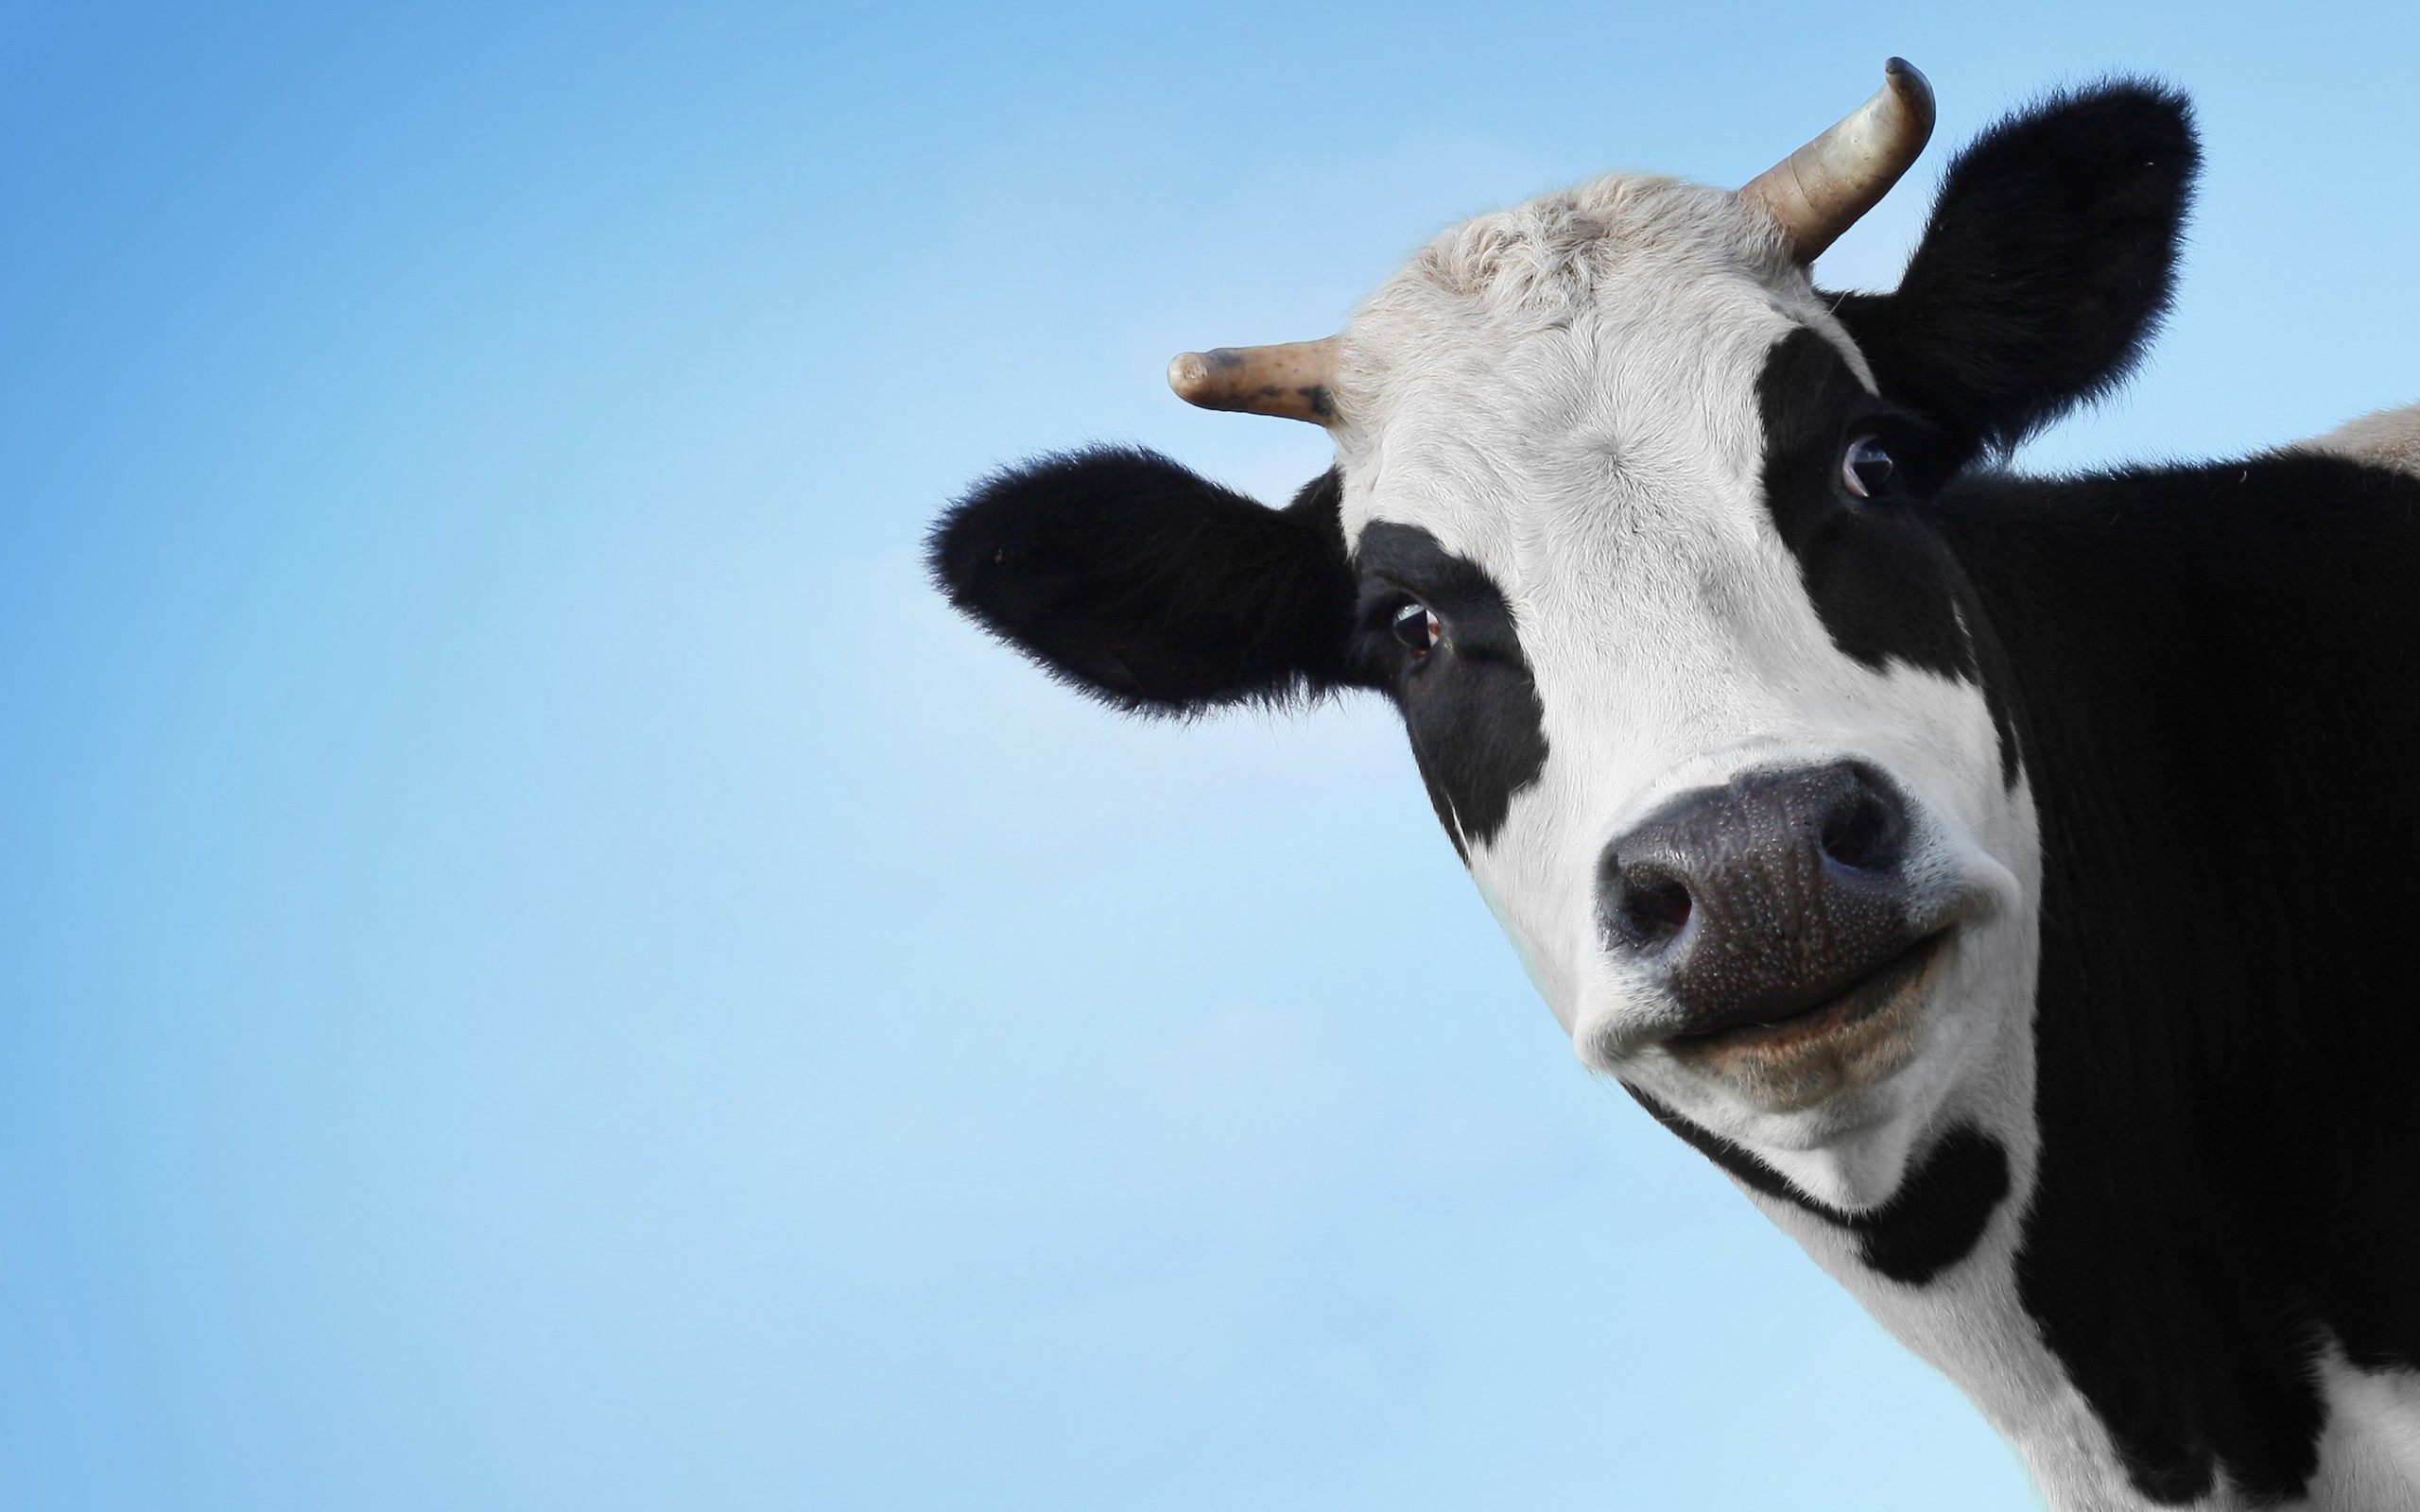 Cow Face Funny Wallpaper For Desktop Of